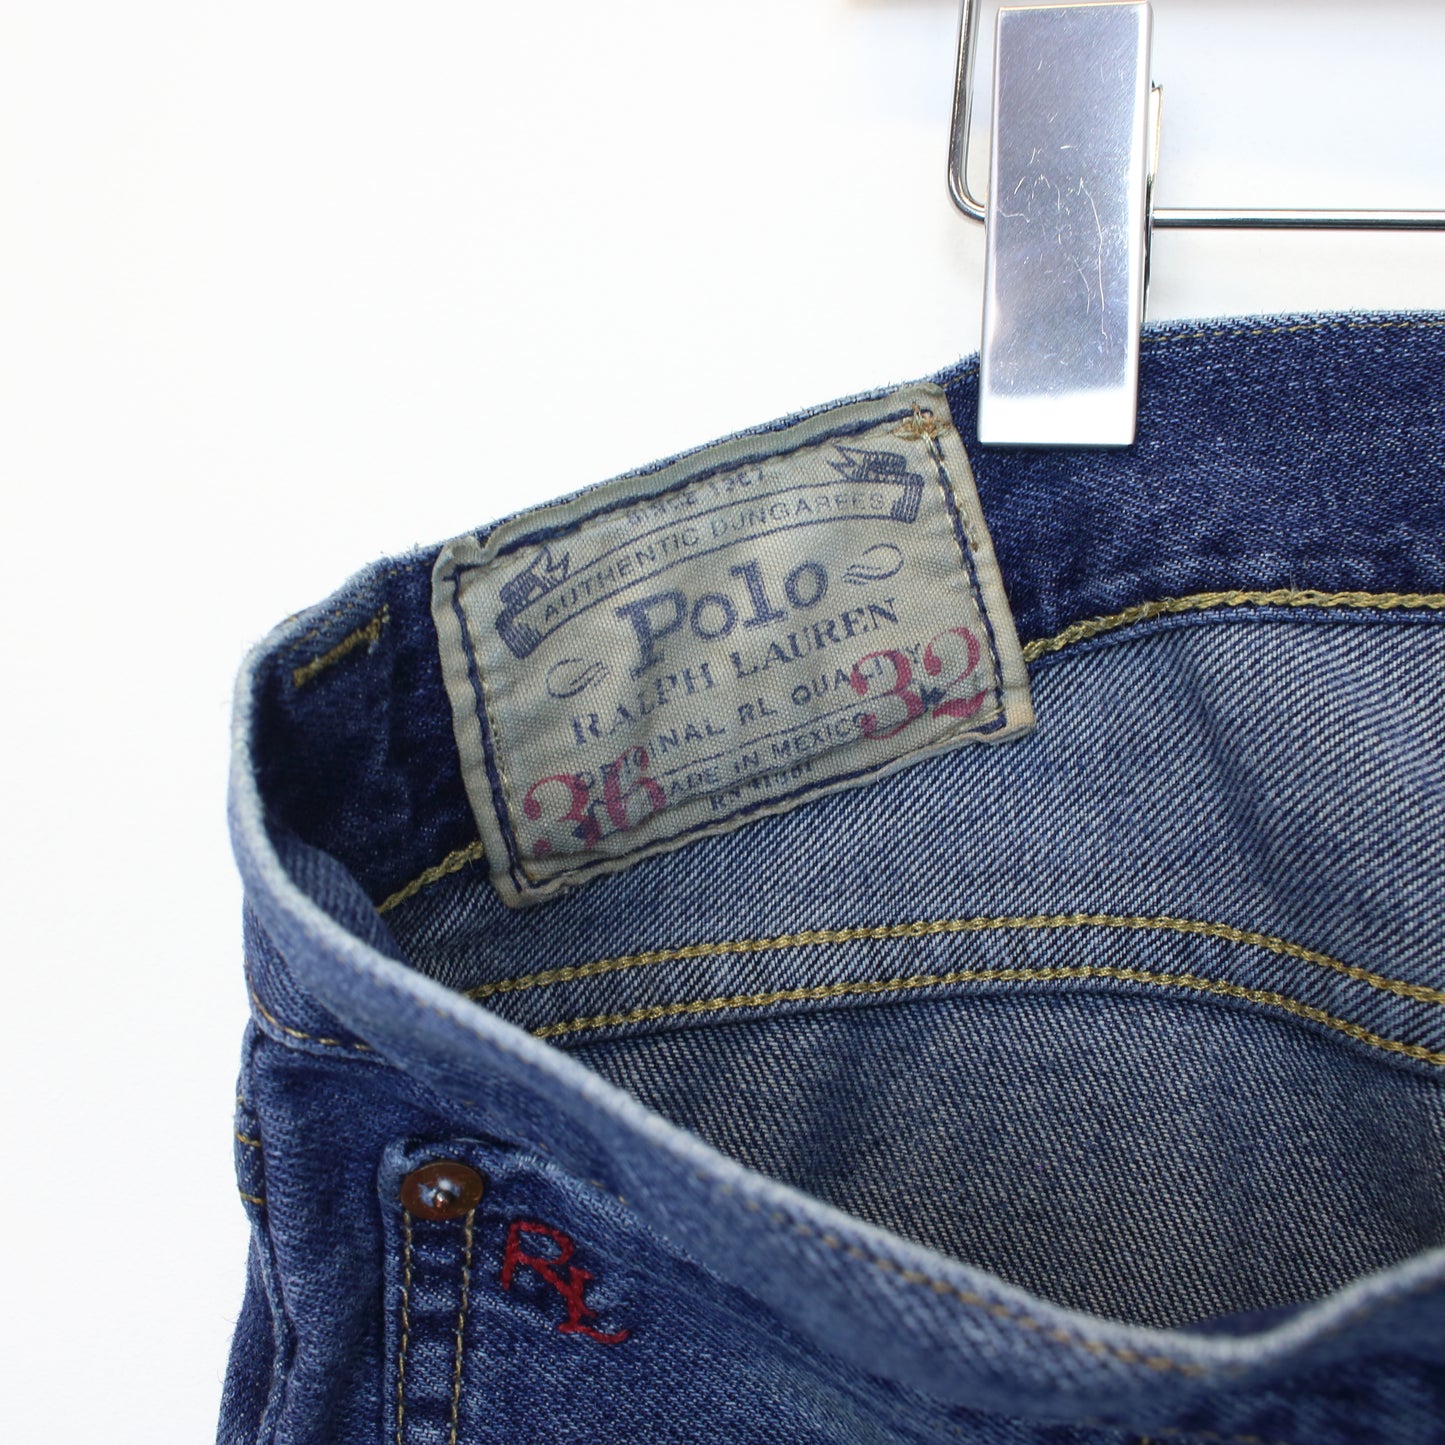 Vintage Ralph Lauren jeans in blue. Best fits 39